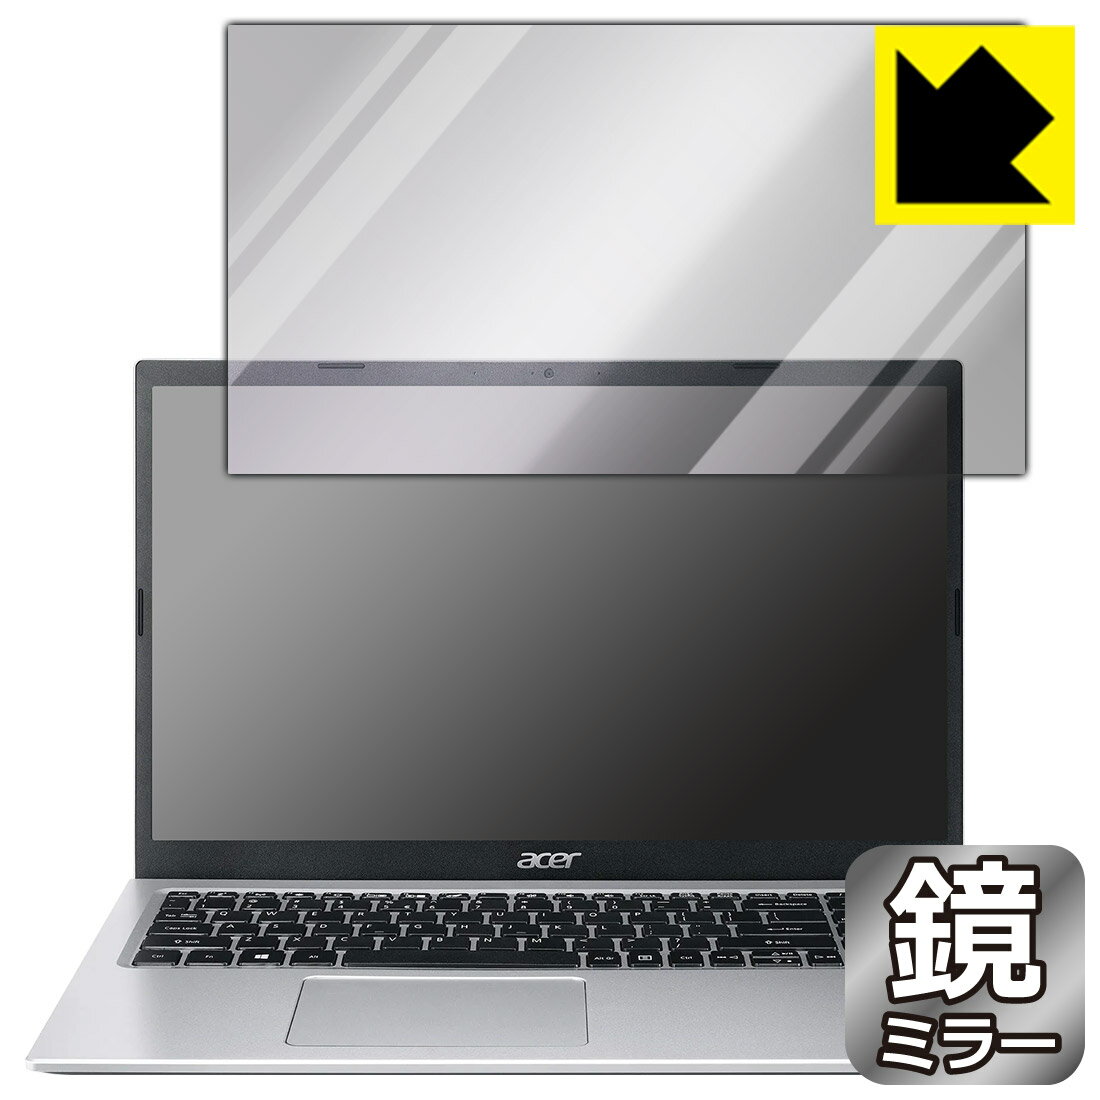 Mirror Shield 保護フィルム Acer Aspire 3 (